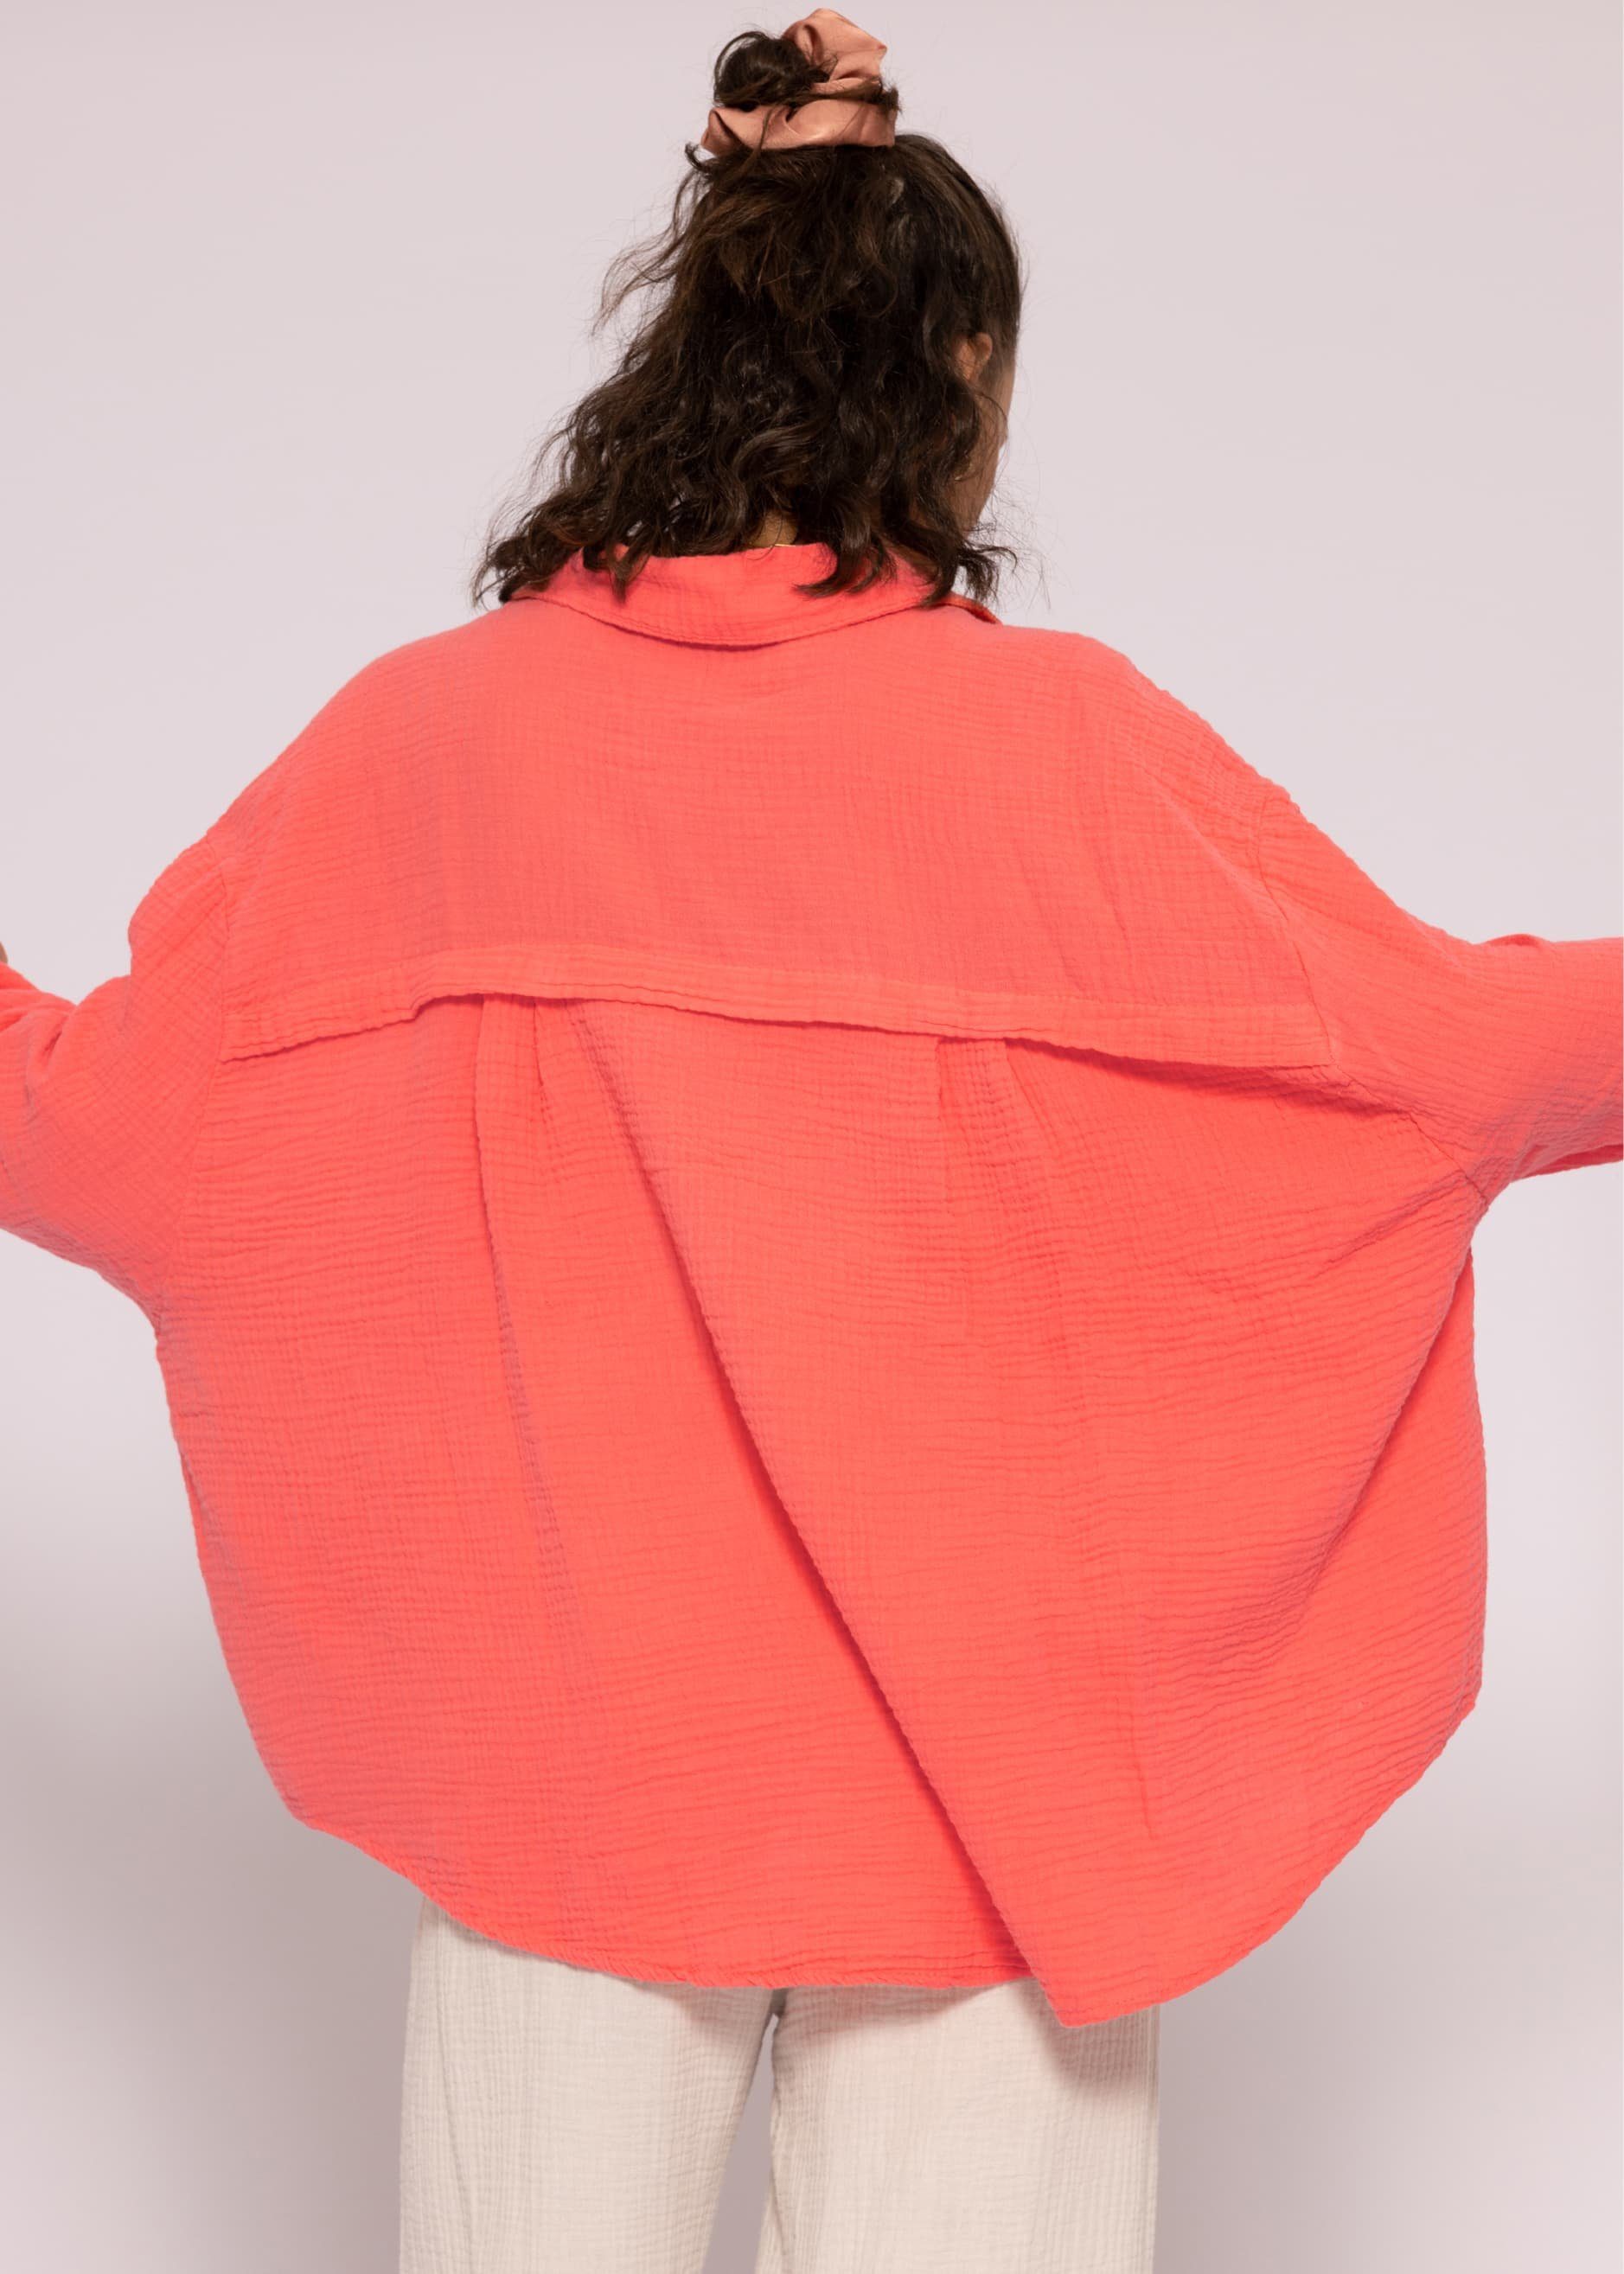 Langarm Oversize Koralle Musselin lang aus Baumwolle V-Ausschnitt Hemdbluse mit Longbluse Bluse Damen SASSYCLASSY